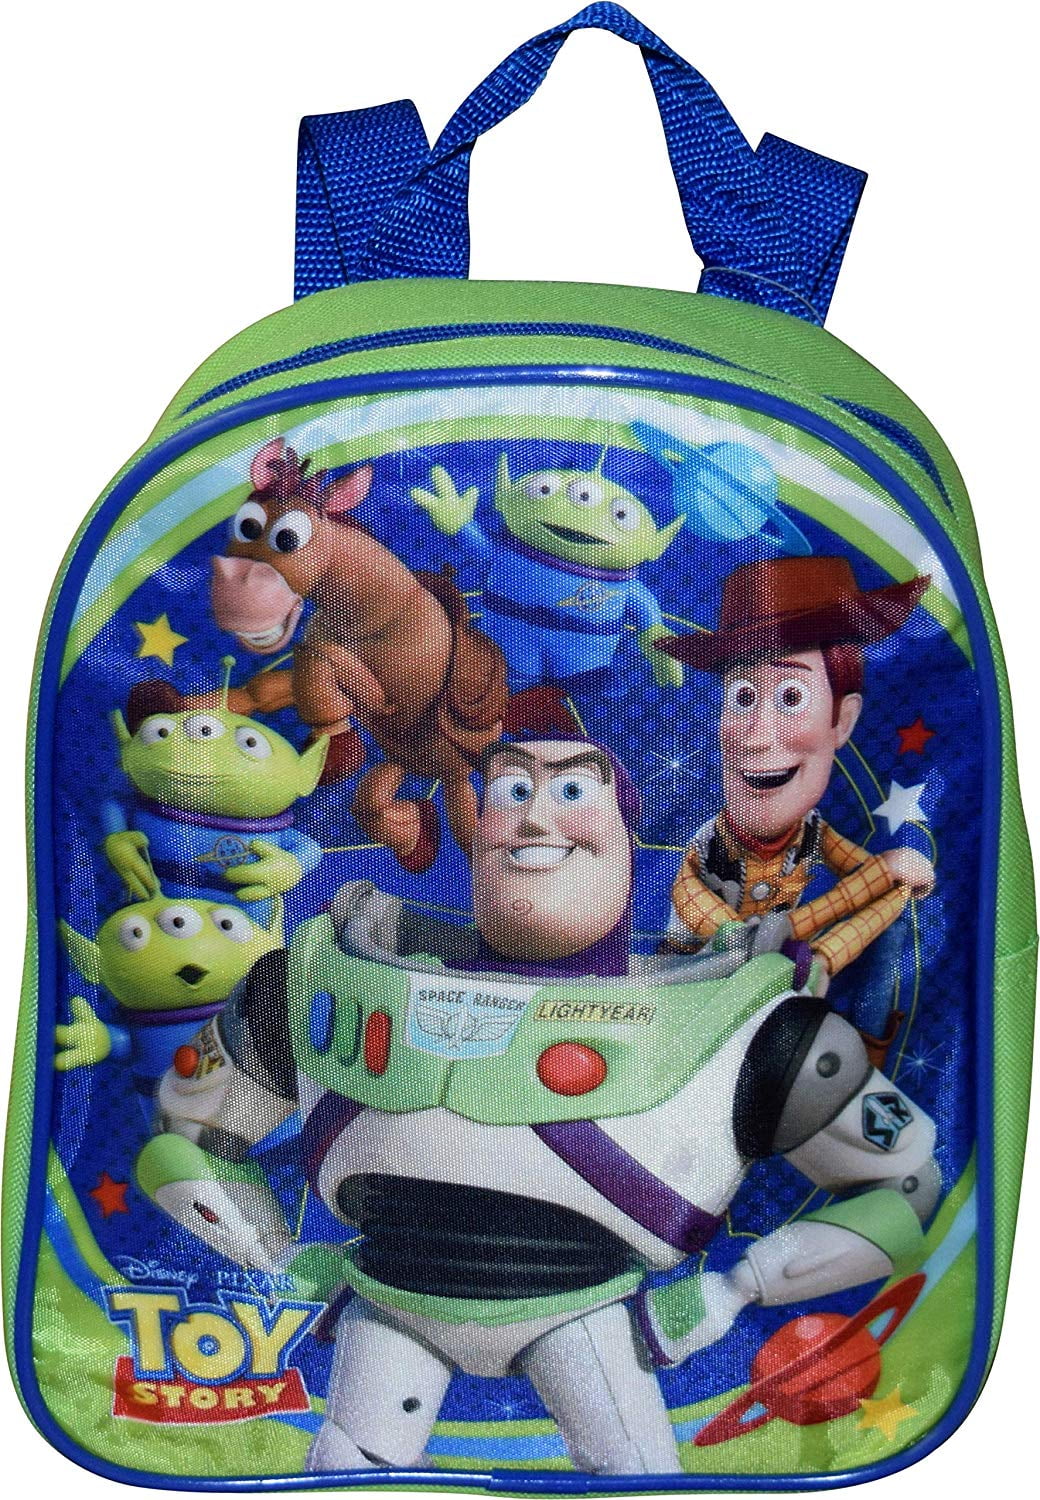 Woody Buzz Rex Forky 10" 009359 Mini Backpack Disney Toy Story 4 